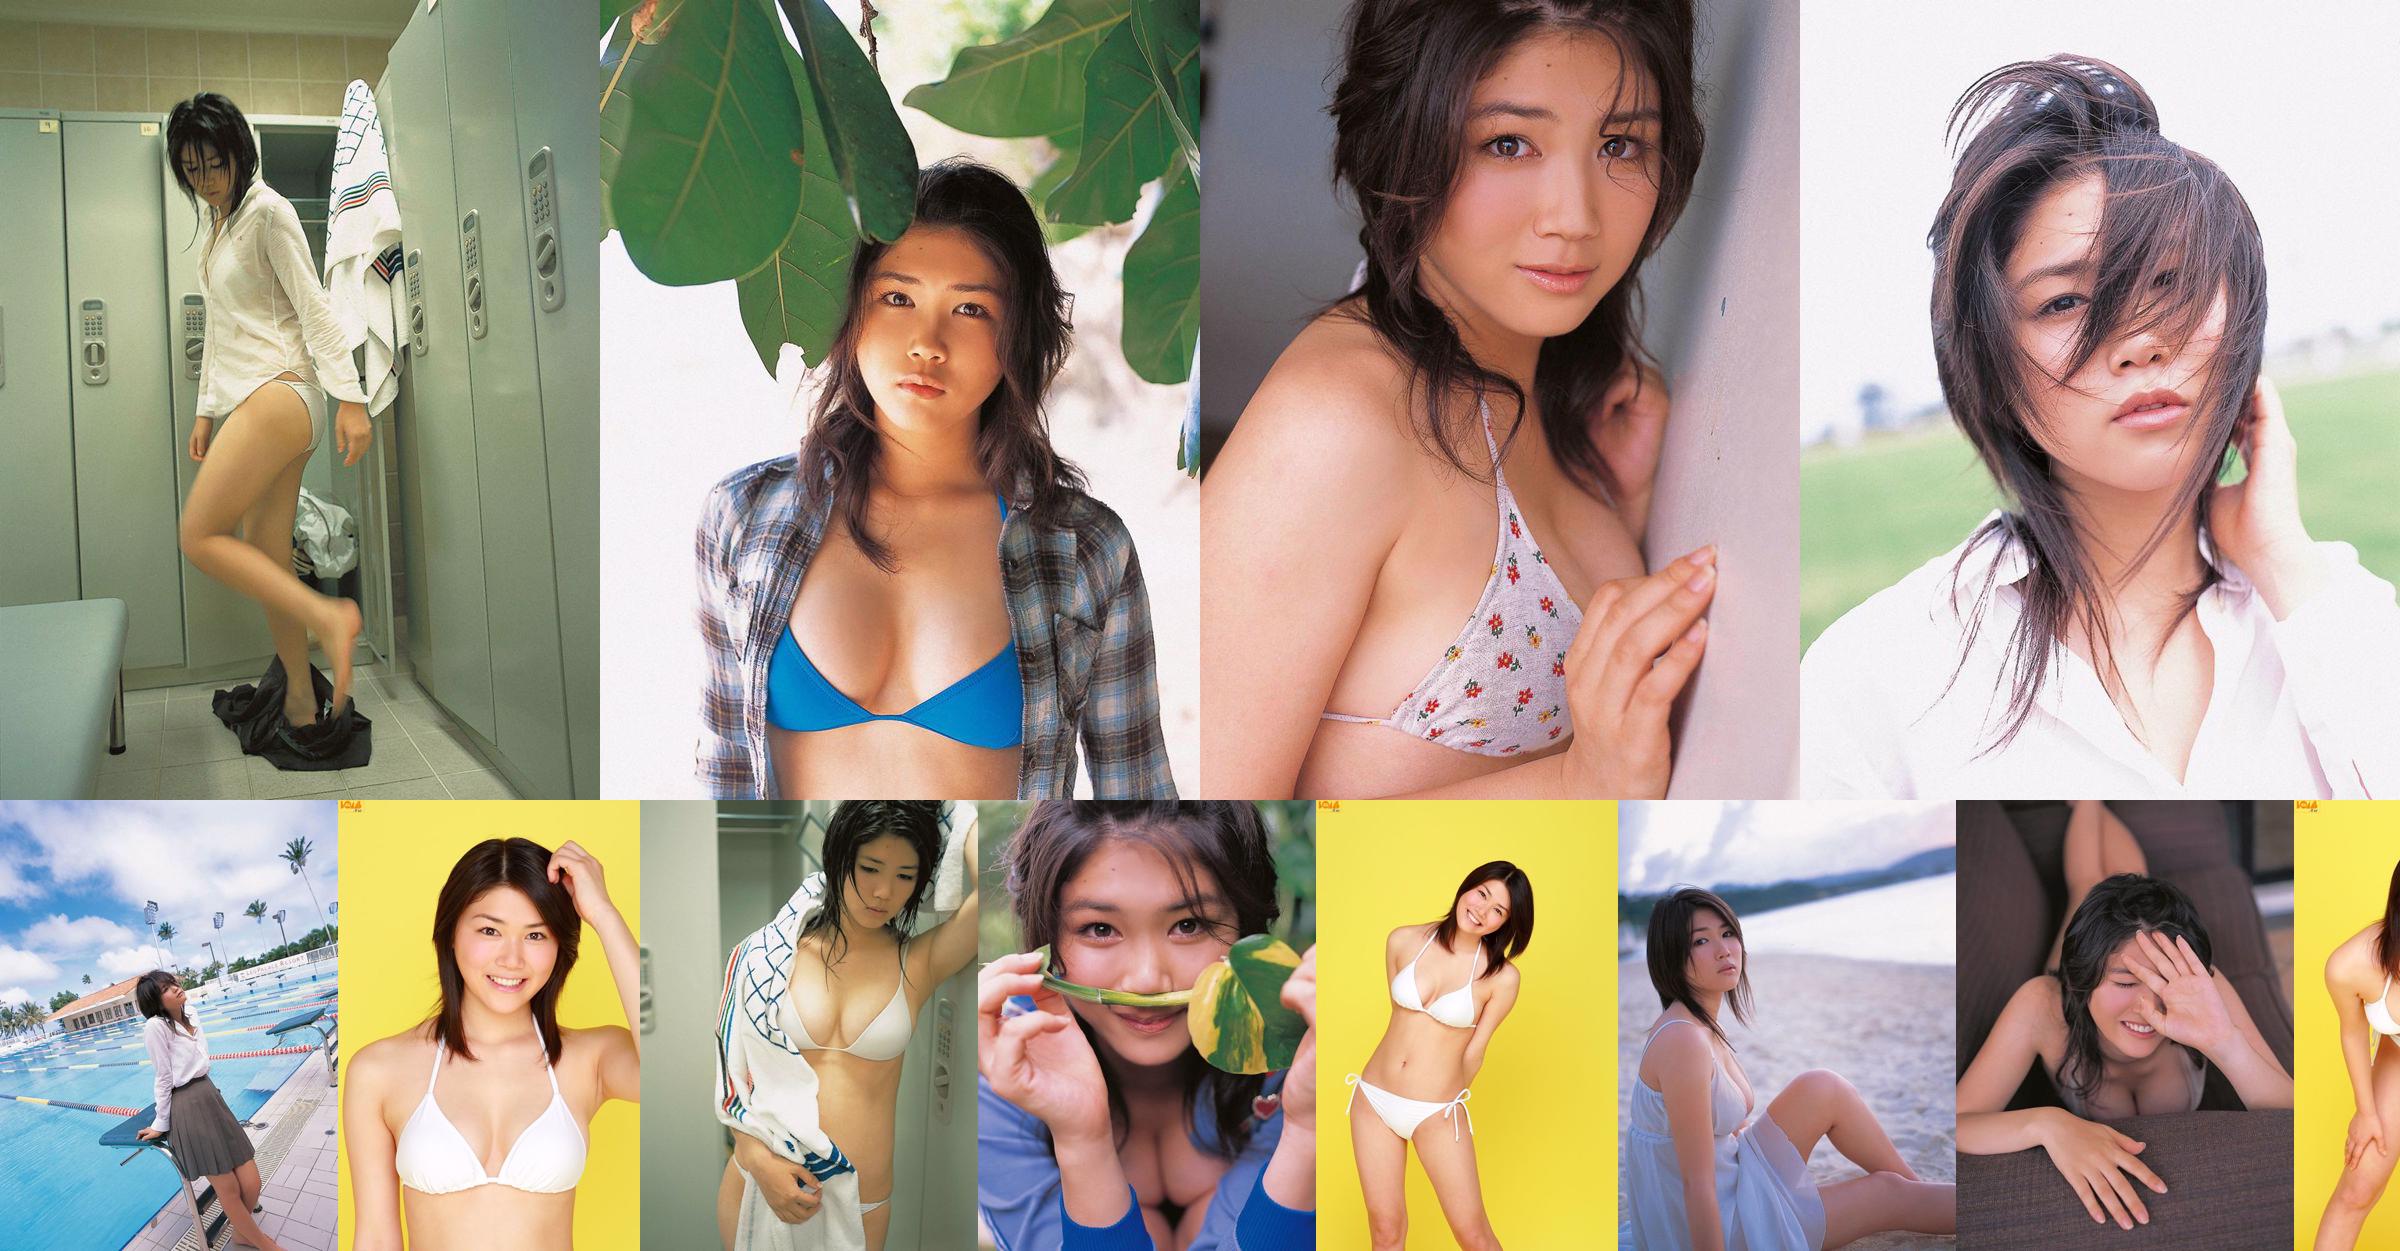 [Bomb.TV] August 2006 issue of Mami Nagaoka Mami Nagaoka / Mami Nagaoka No.fa13fa Page 6